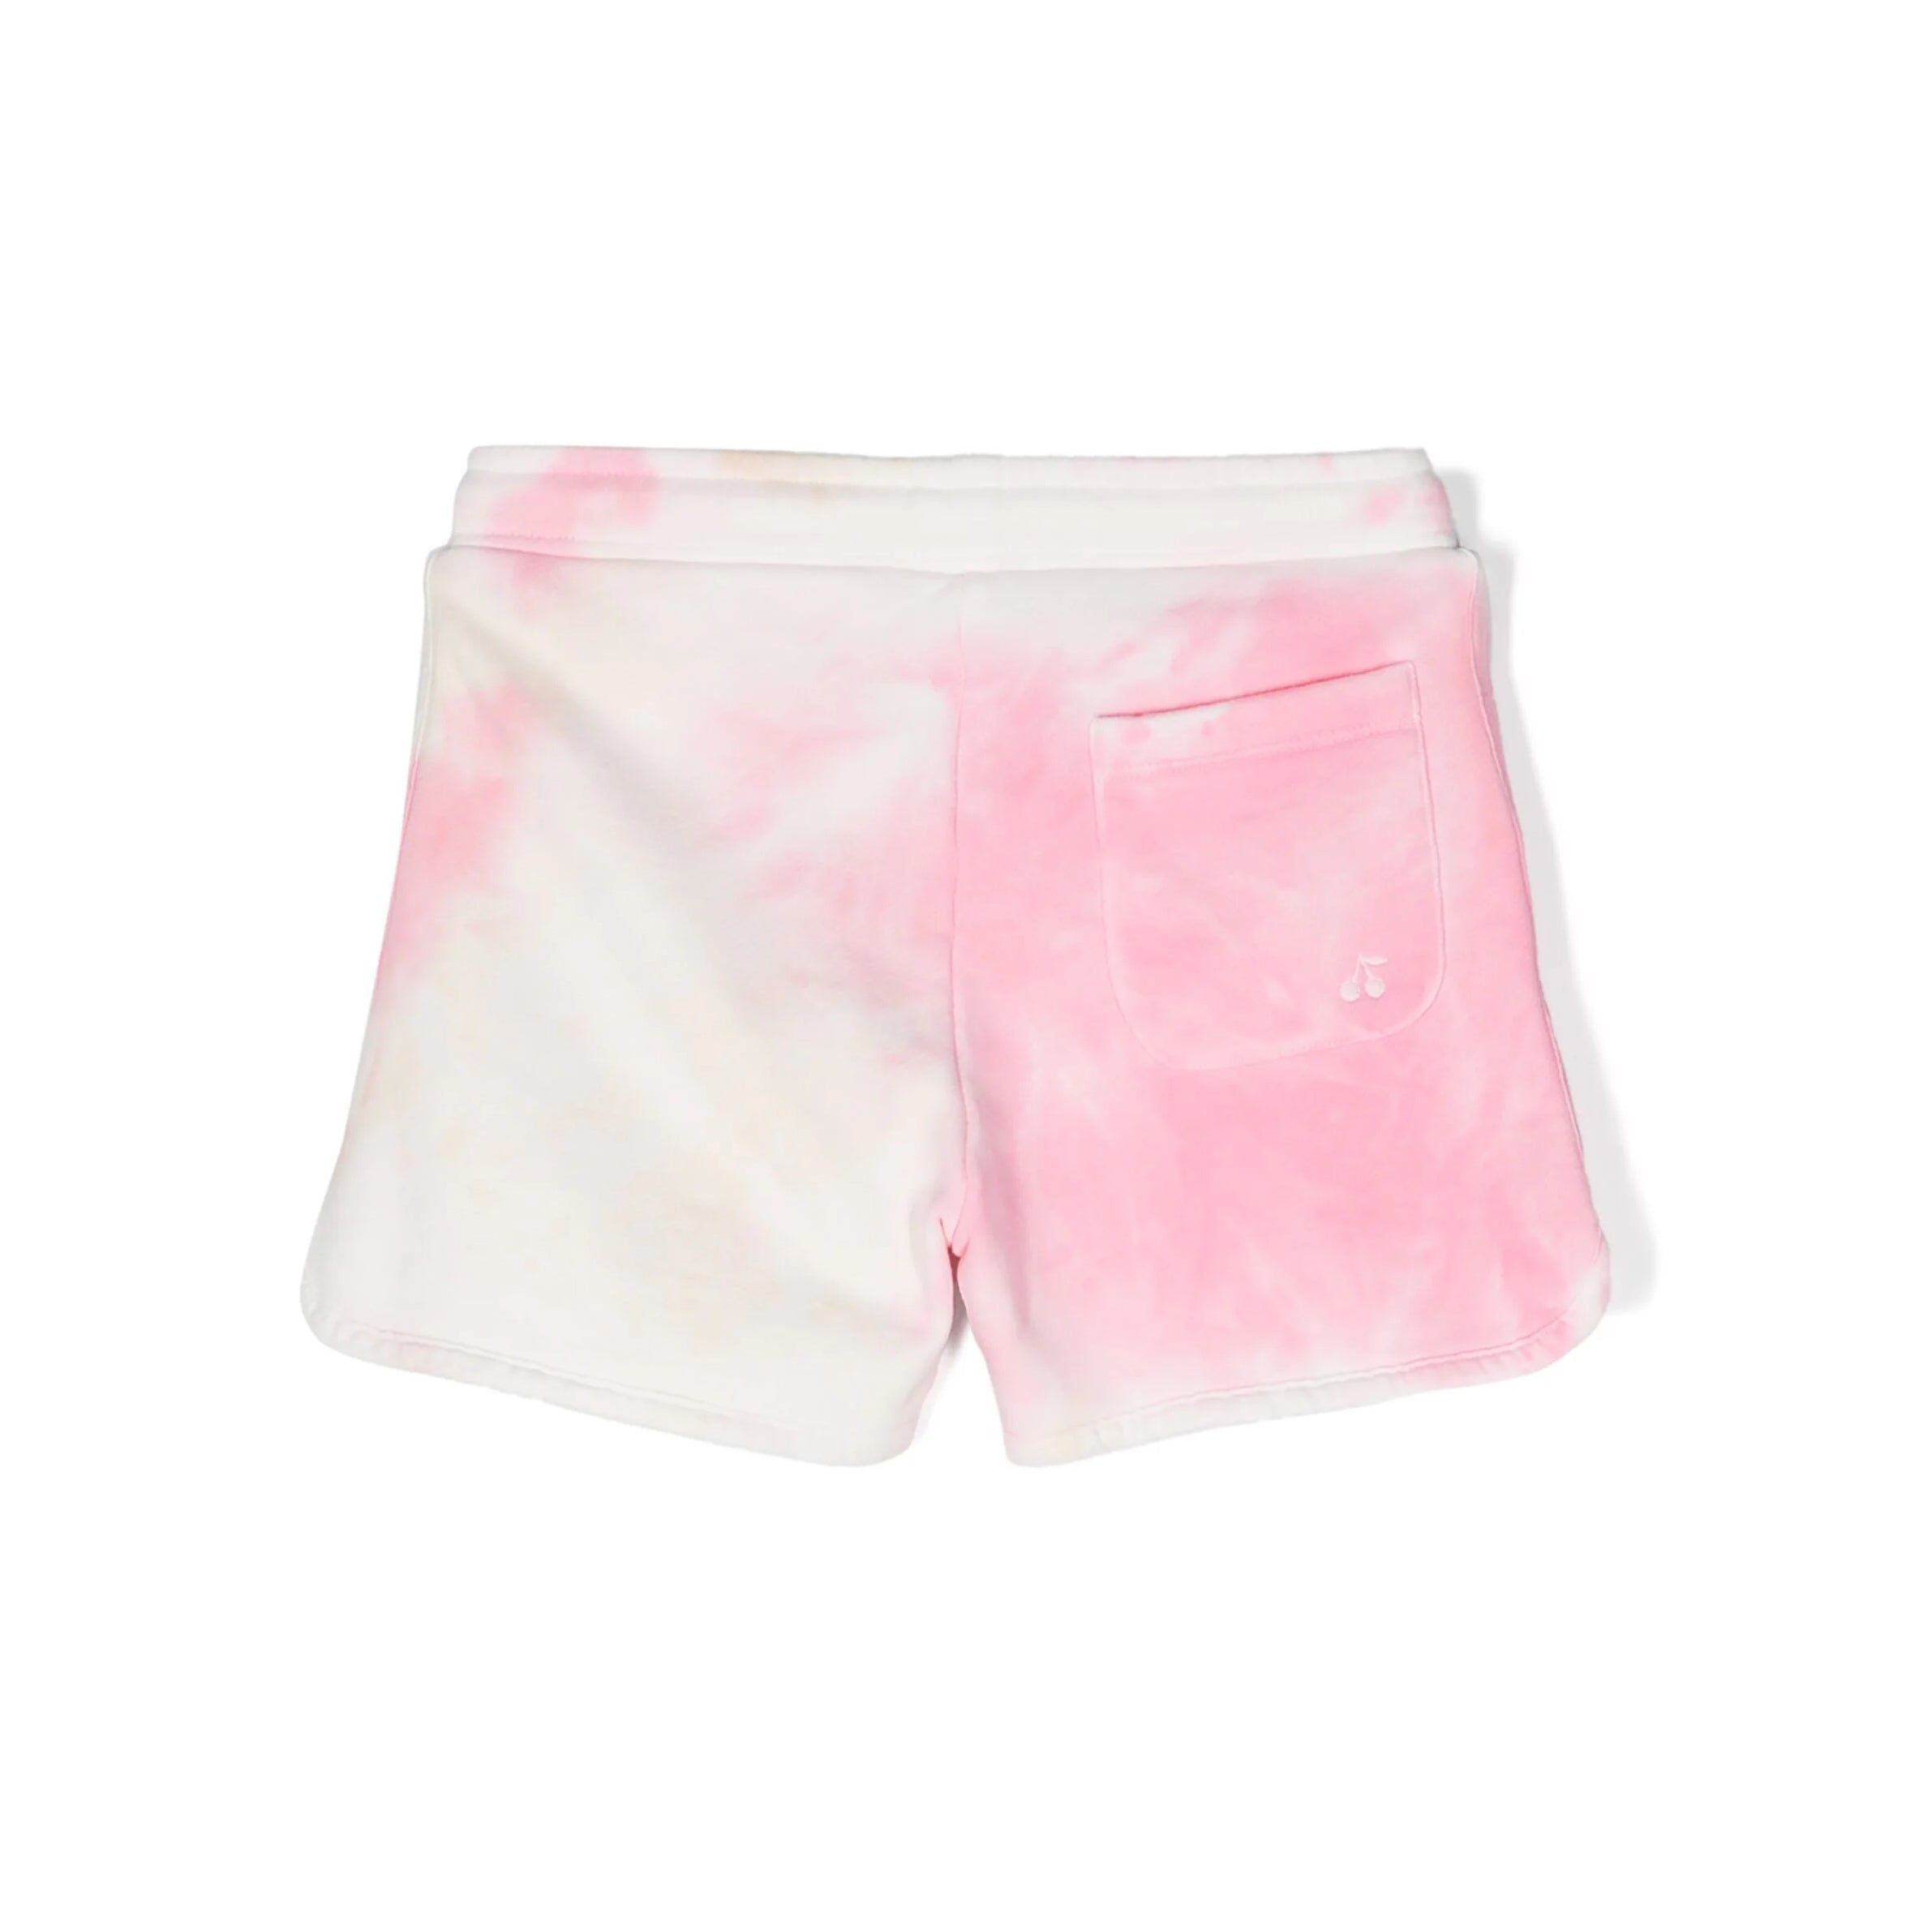 Girls Pink Tie Dye Cotton Shorts